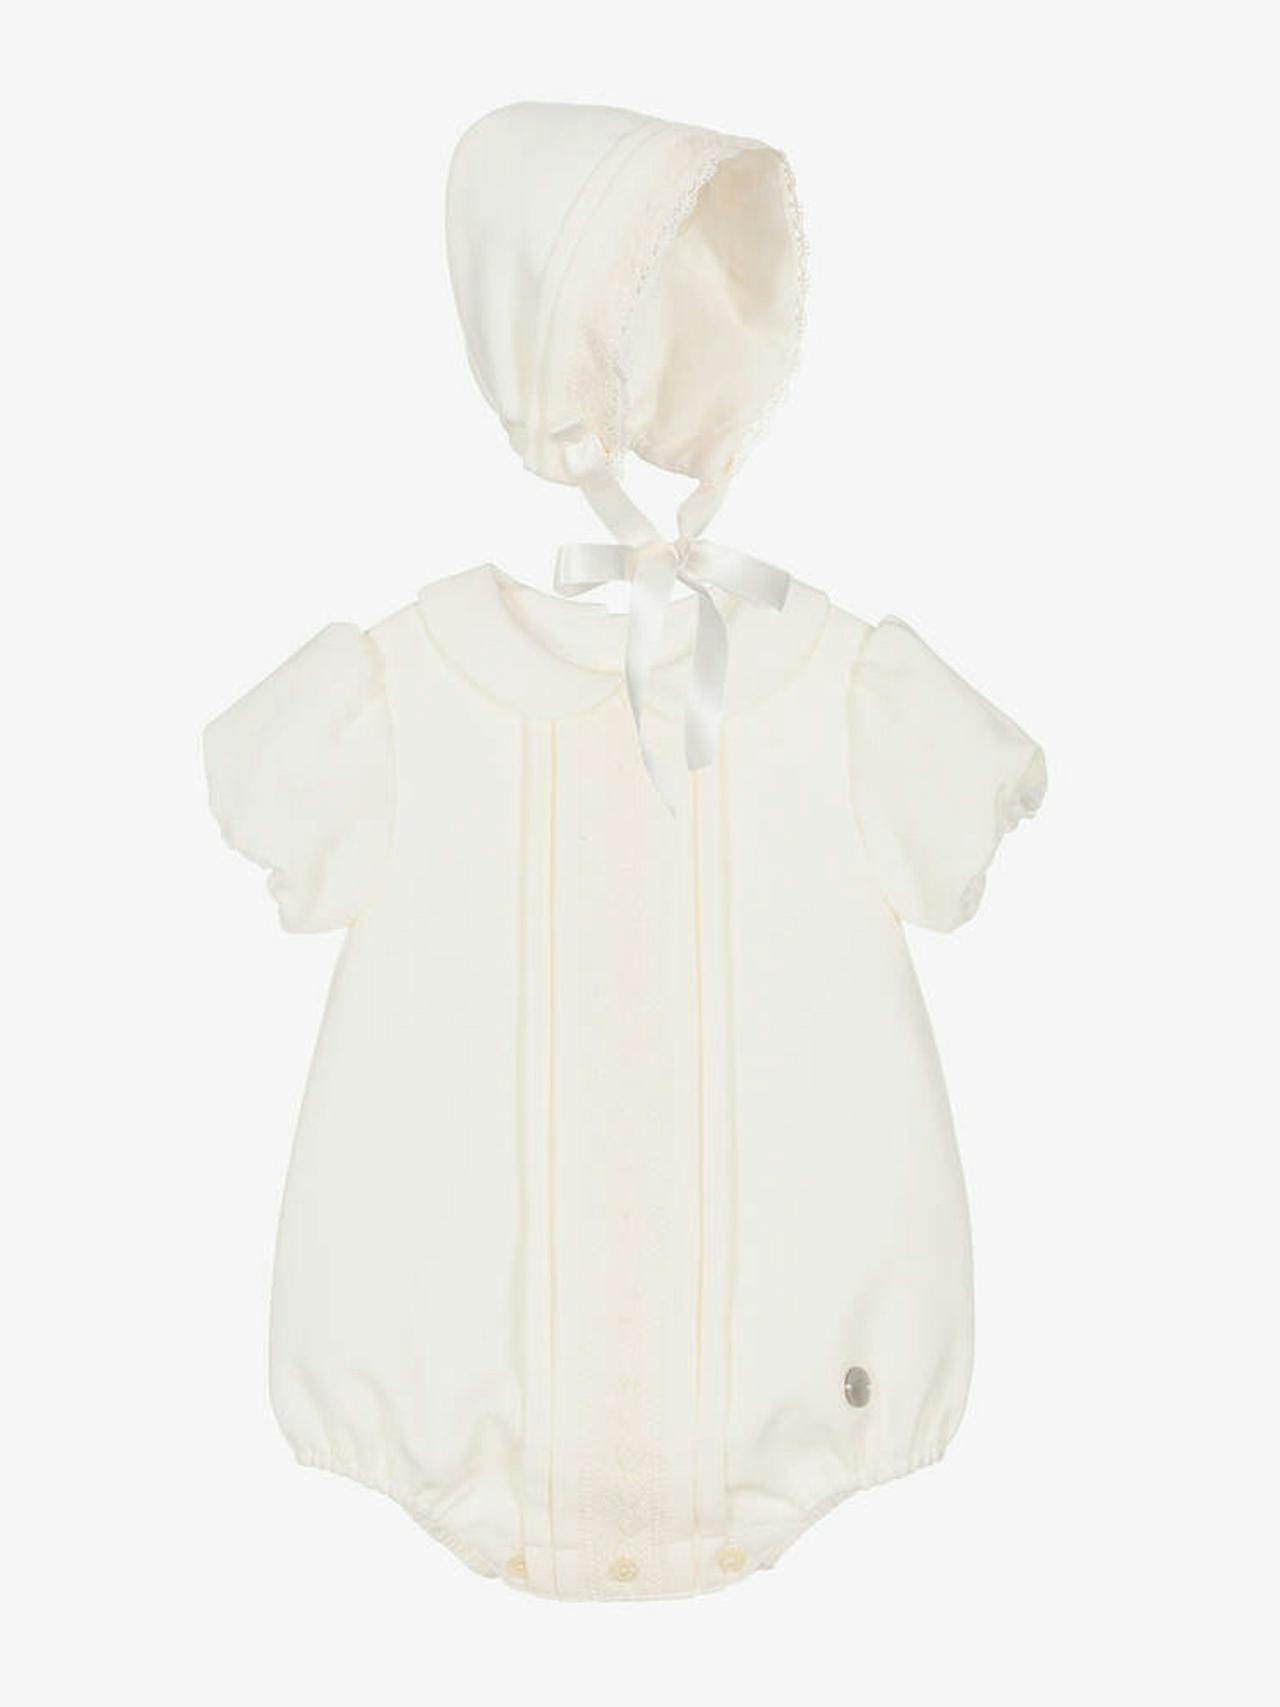 Ivory babysuit & bonnet set